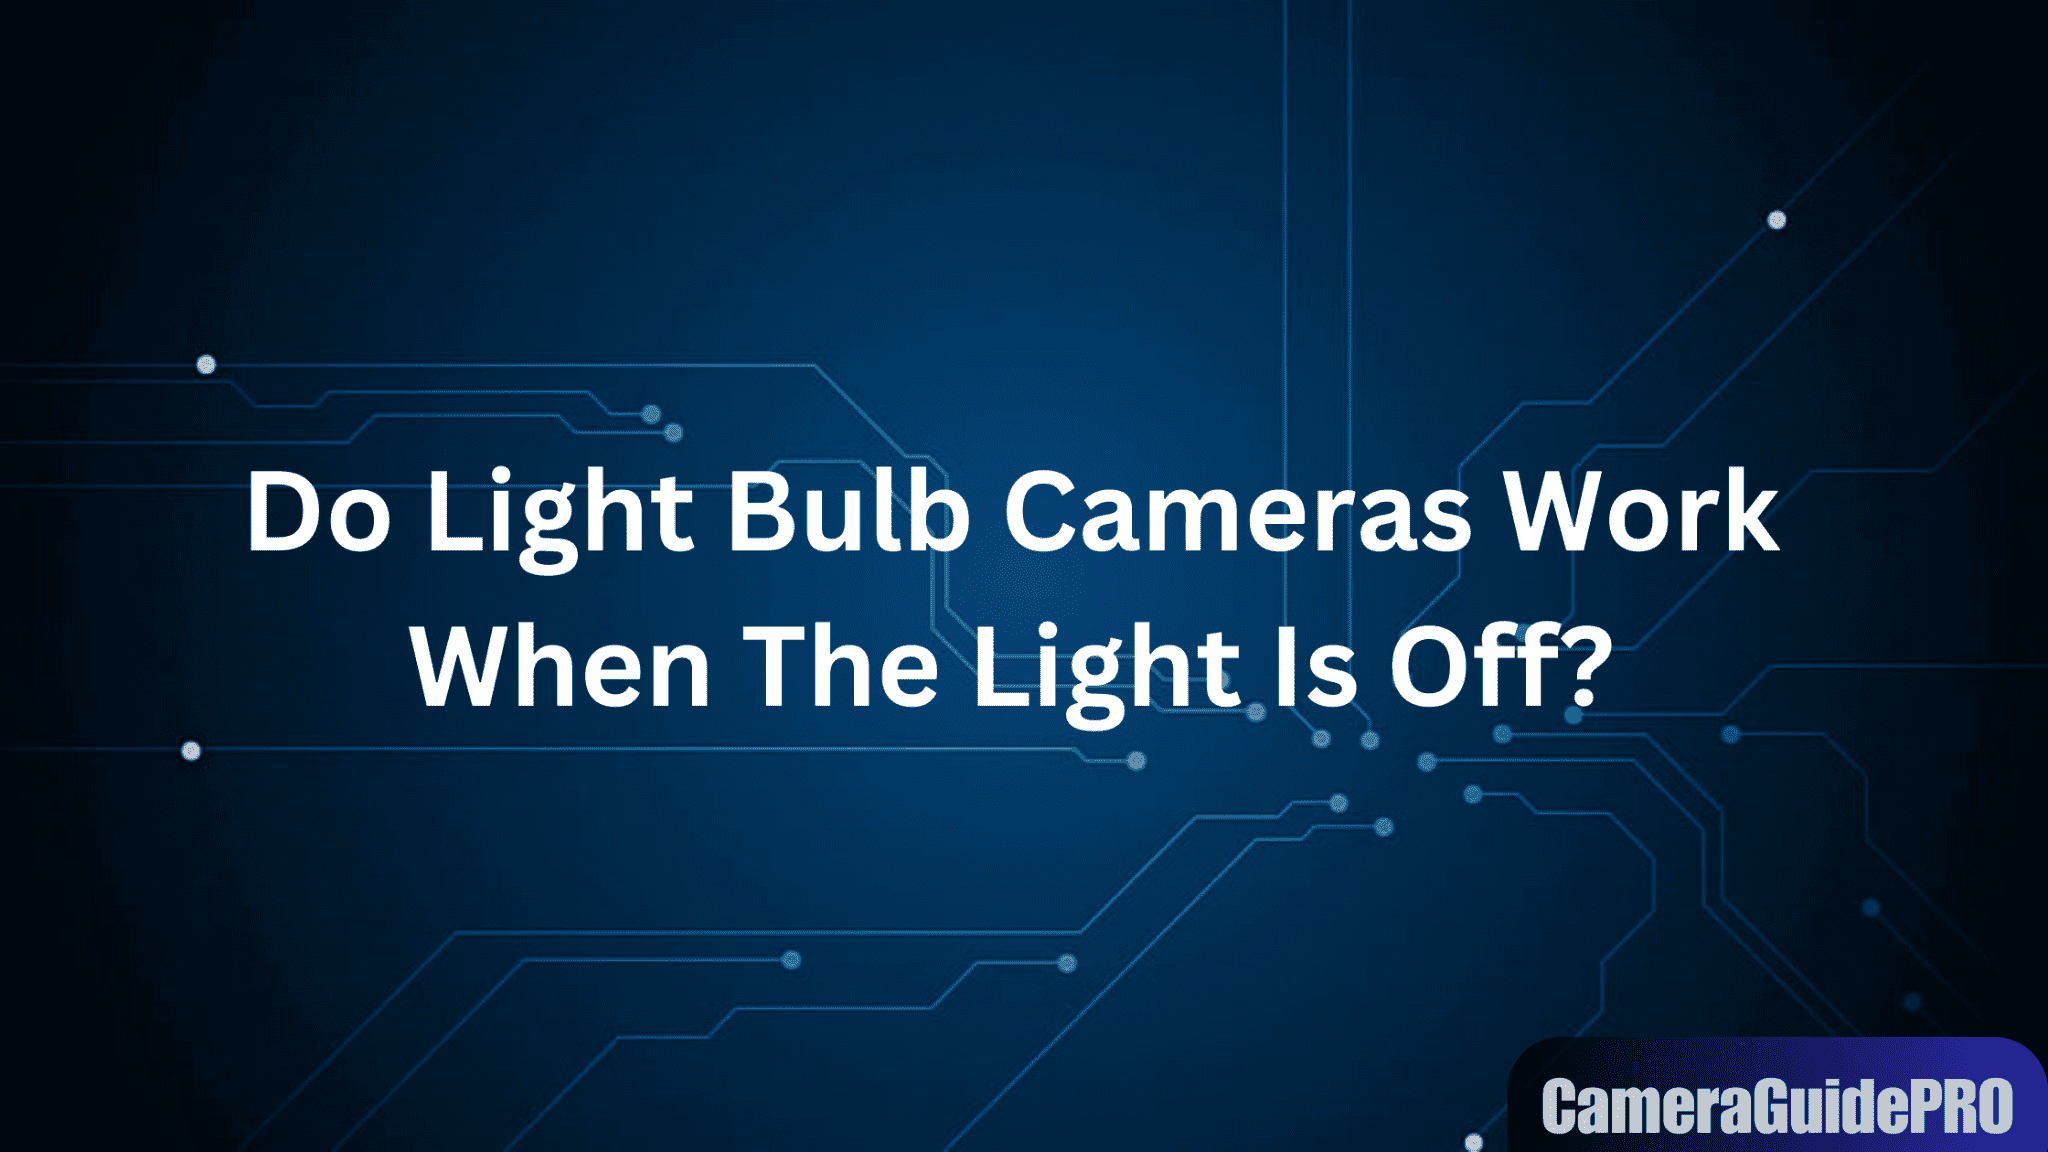 Do Light Bulb Cameras Work When the Light is Off